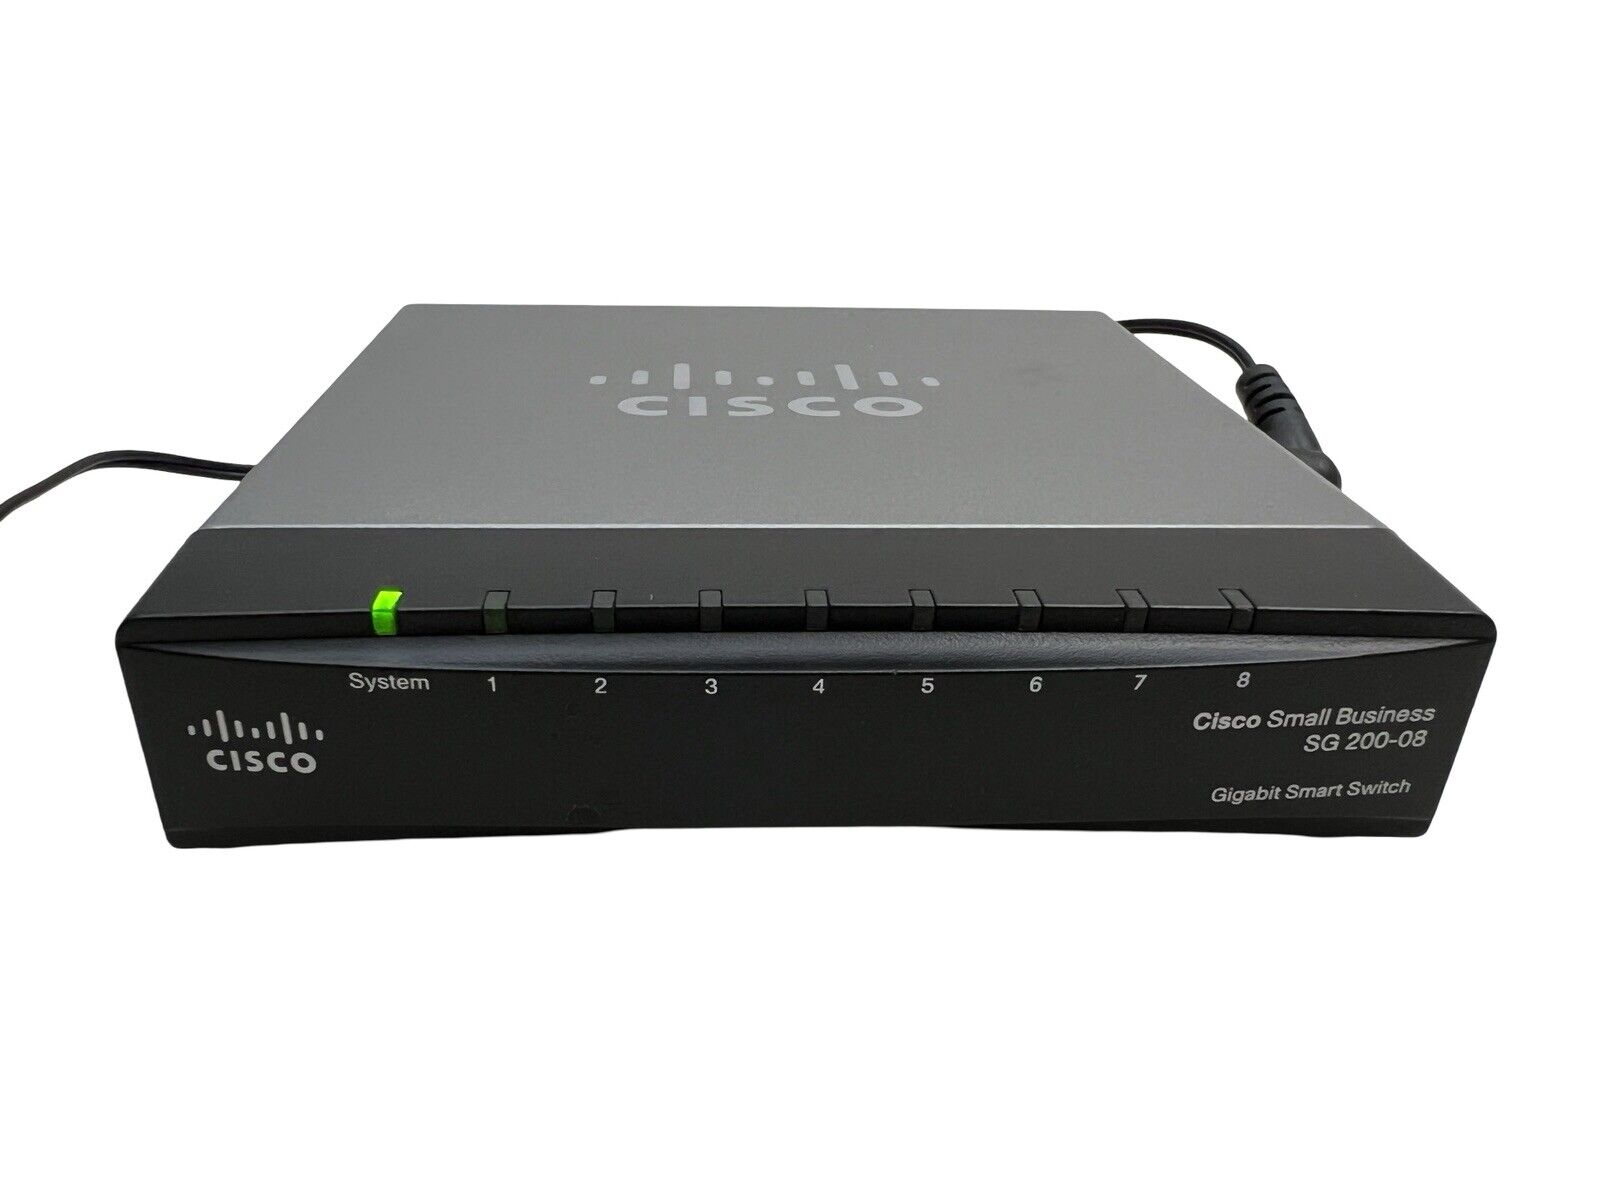 Cisco Small Business 8 Port Gigabit Smart Switch SG200-08